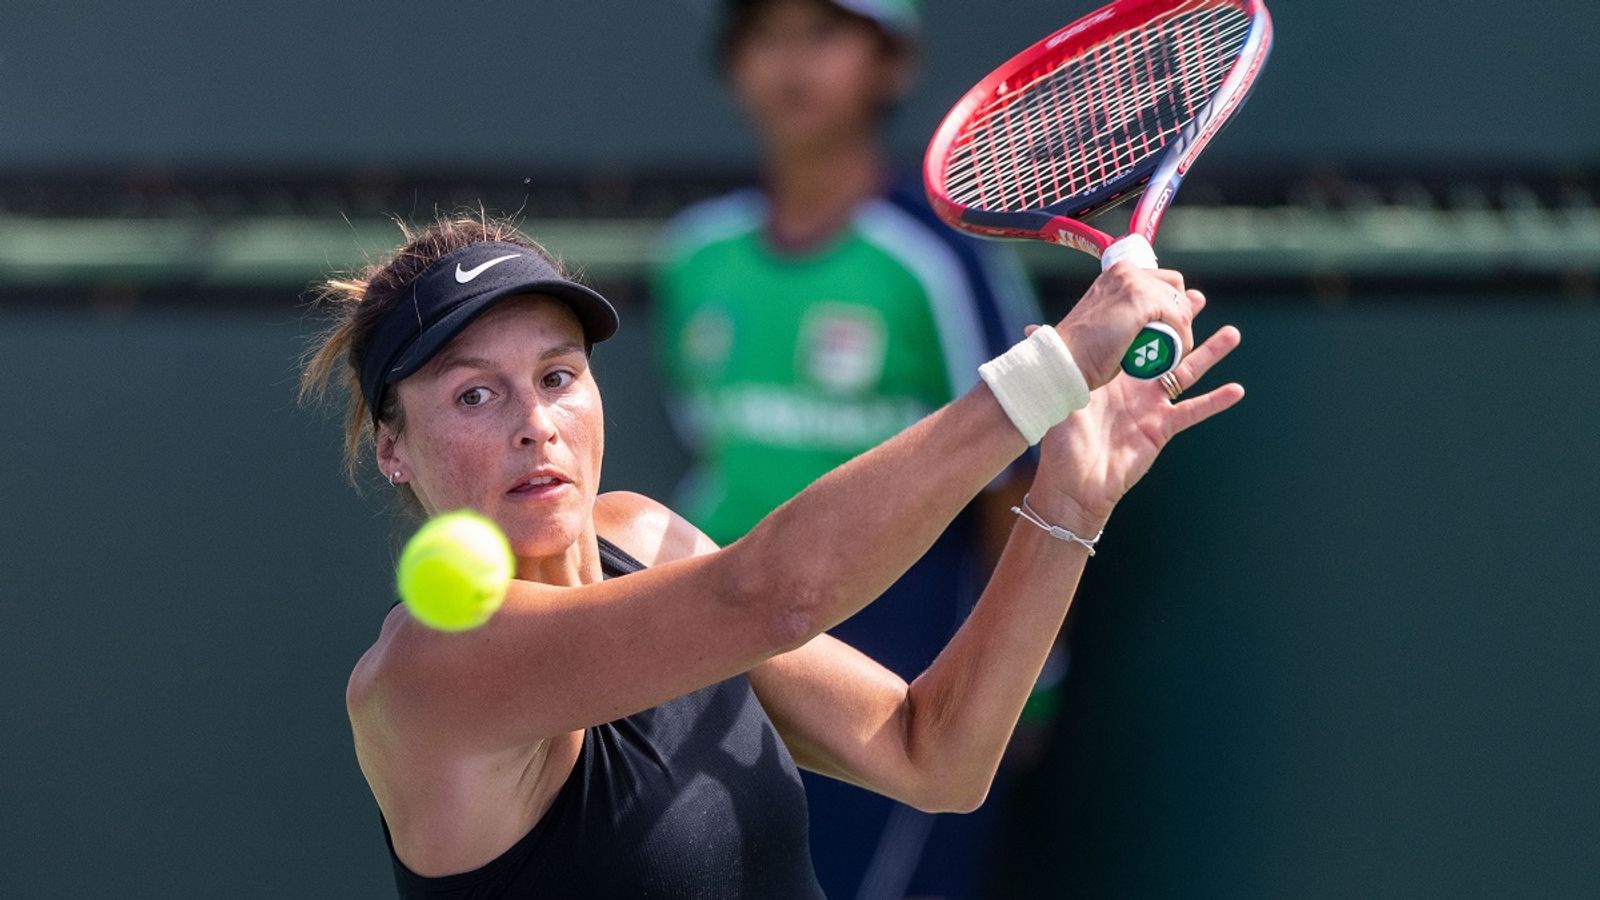 WTA Turnier Nur Tatjana Maria bei den Frauen in Indian Wells in Runde zwei Tennis News Sky Sport